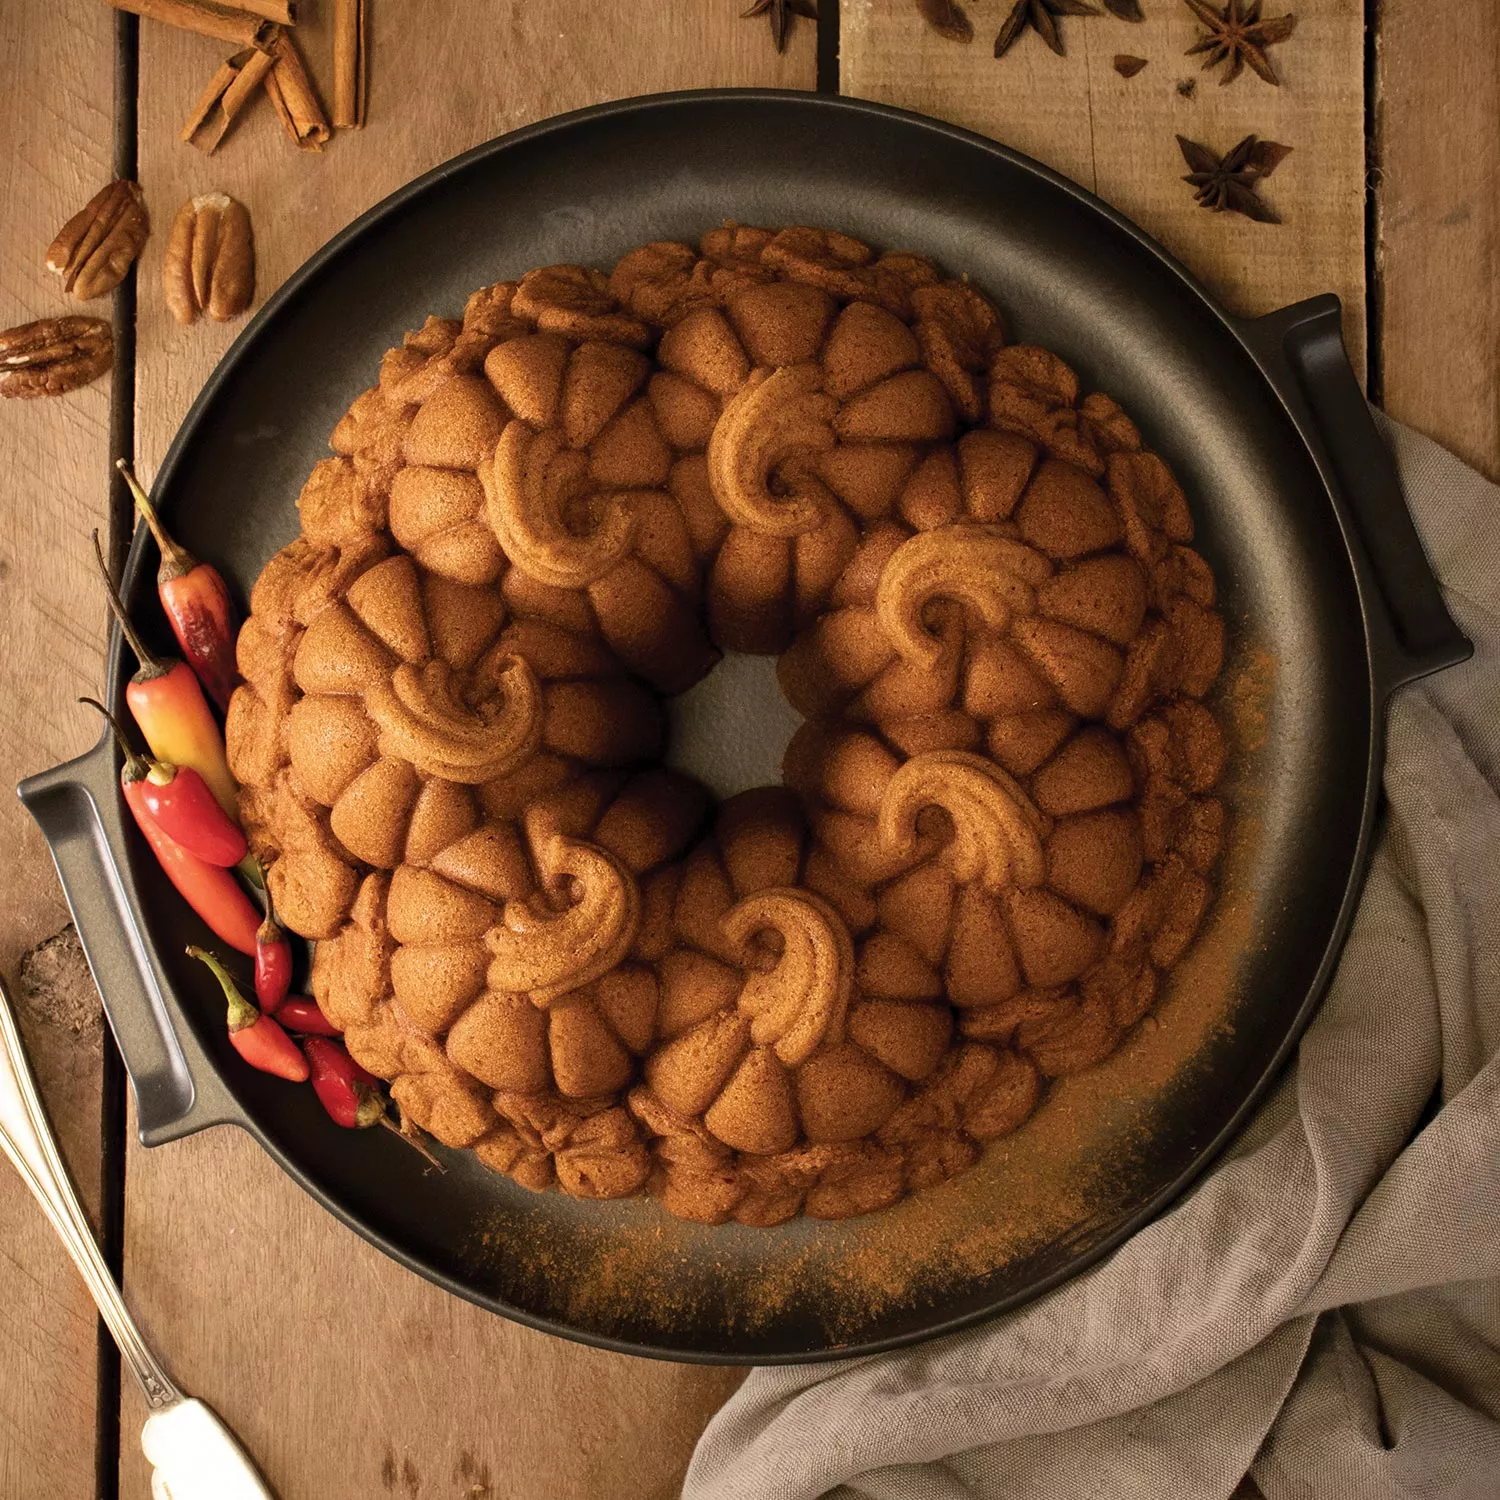 Nordic Ware Cookies & Cream Pan – Every Home Needs This Pan!